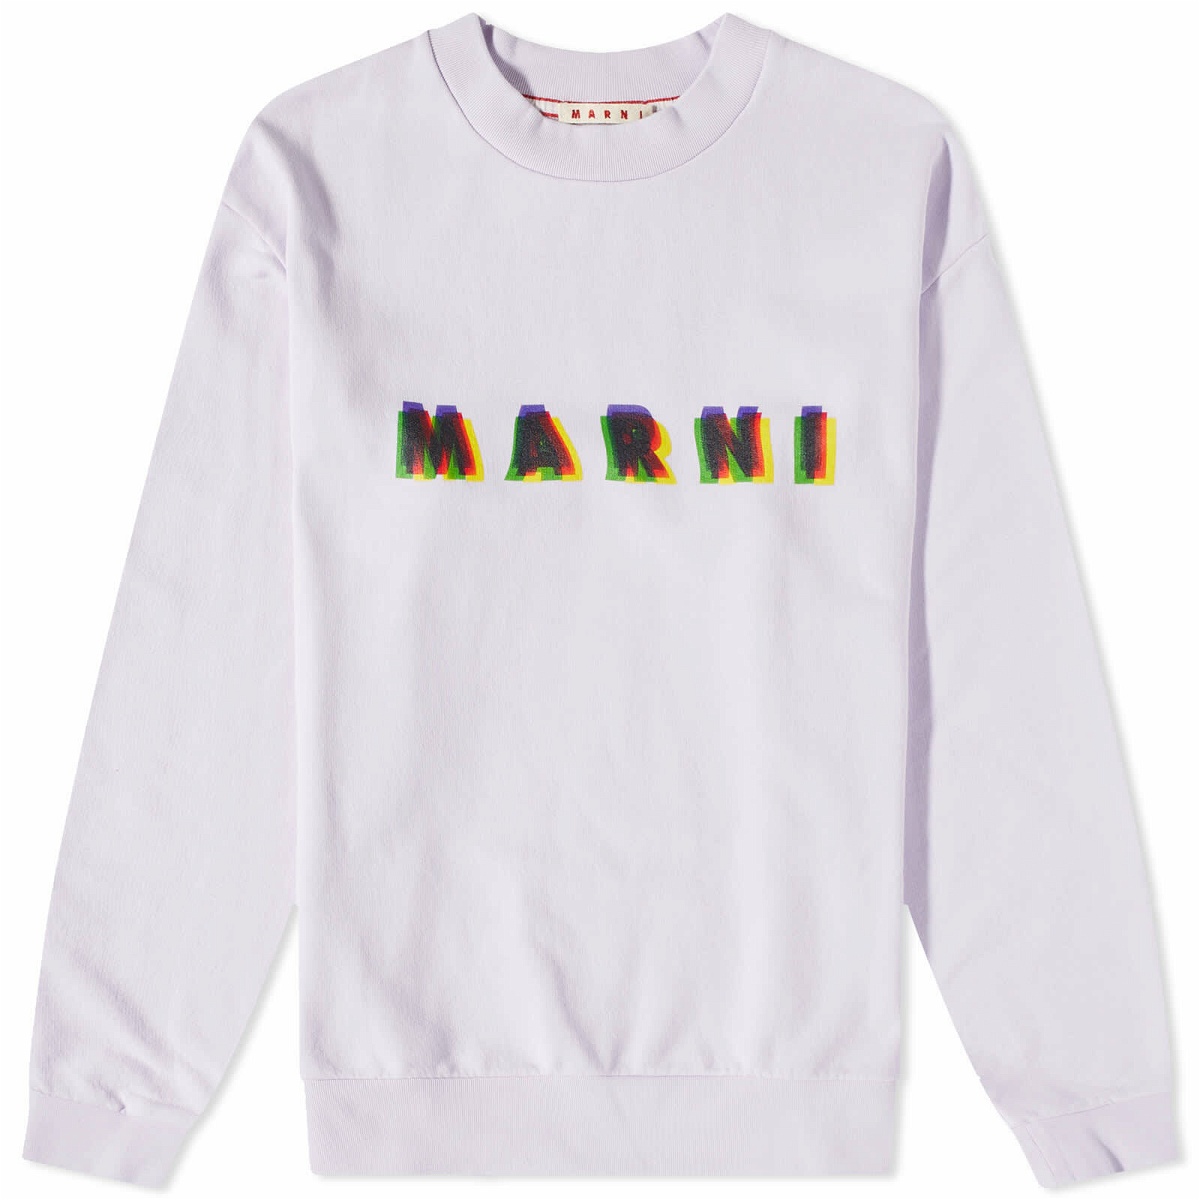 Marni Men's Logo Crew Neck Sweatshirt in Dahlia Marni